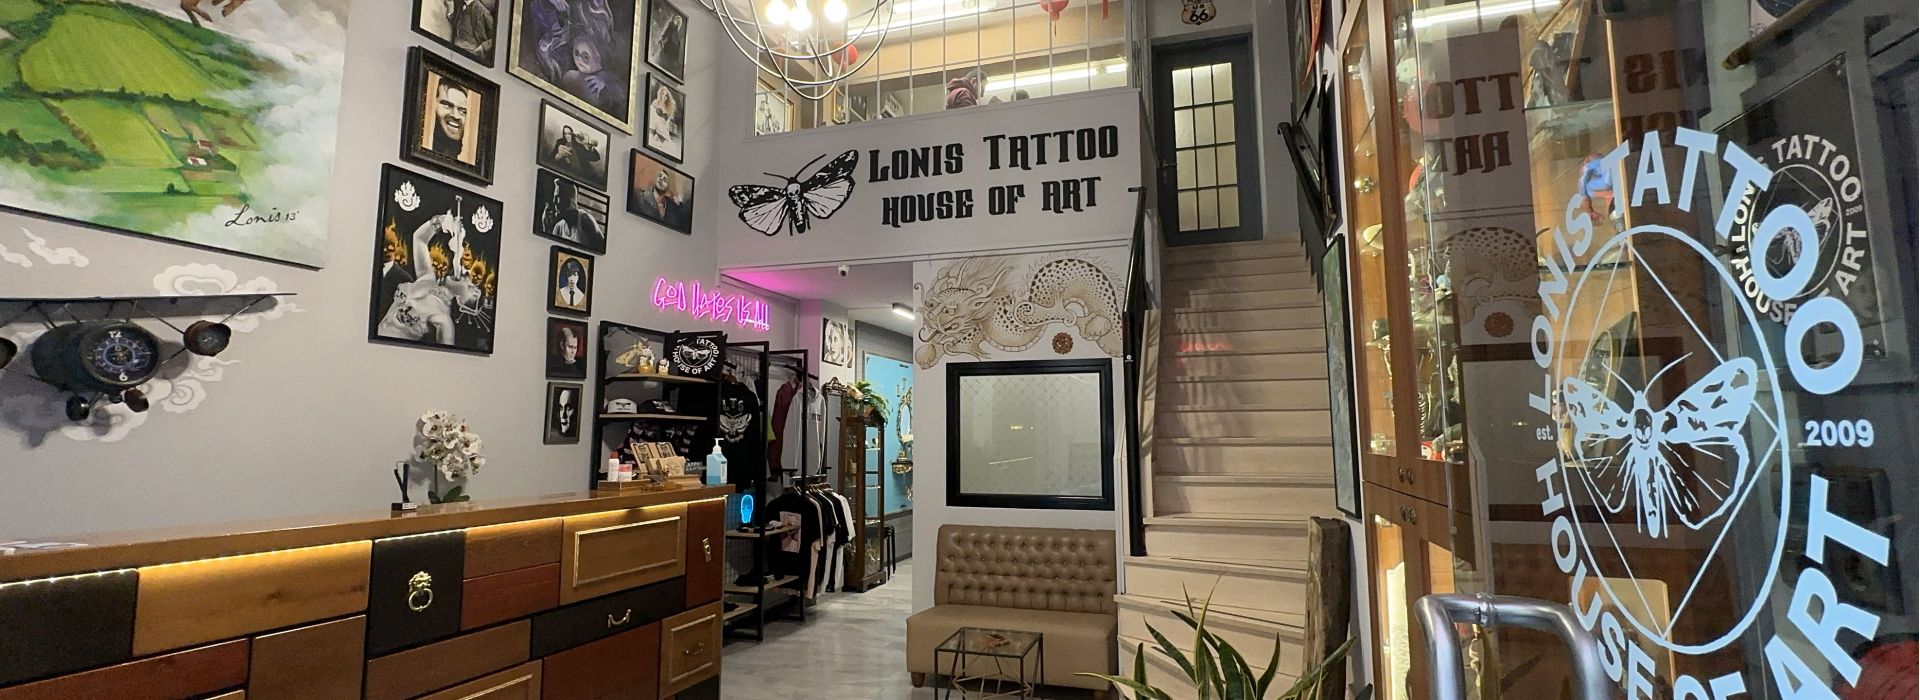 studio lonis-tattoo-studio-house-of-art